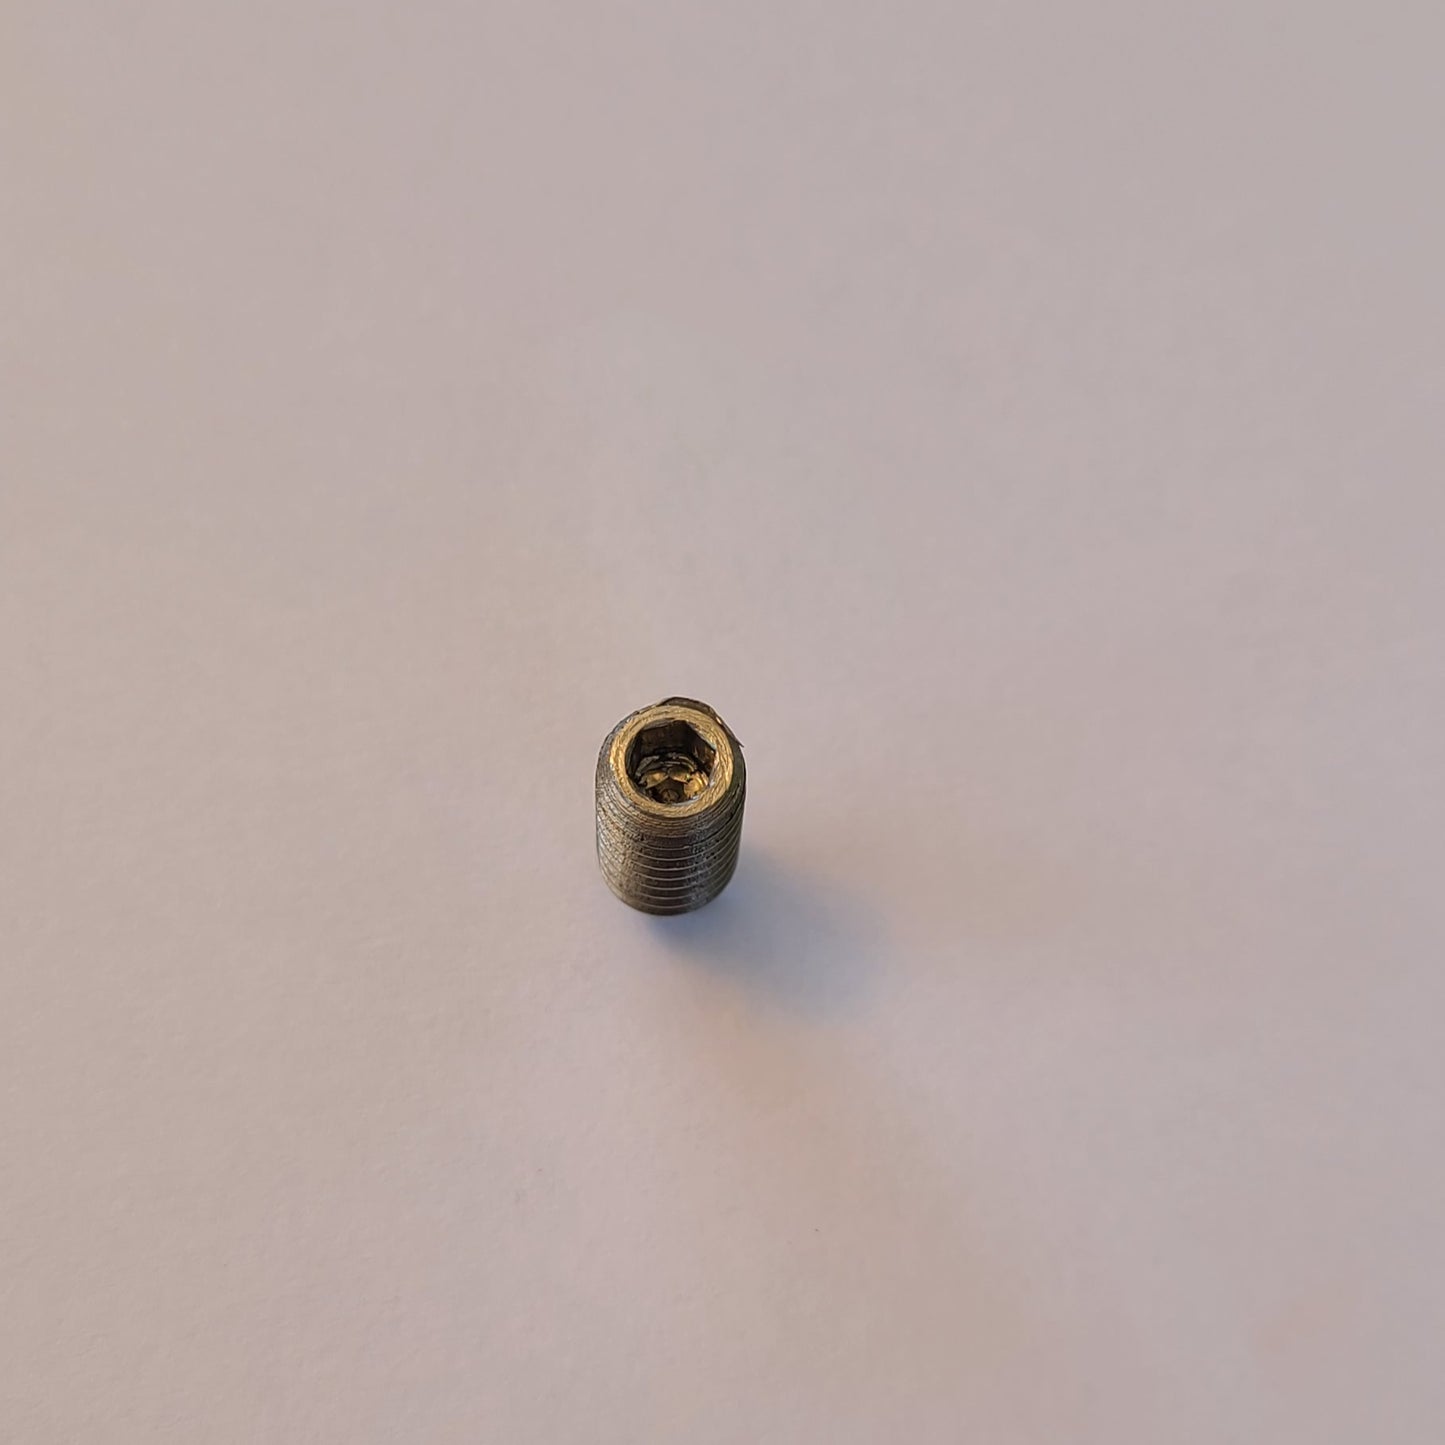 Soft tip stainless 1/4-20 x 1/2" set screw